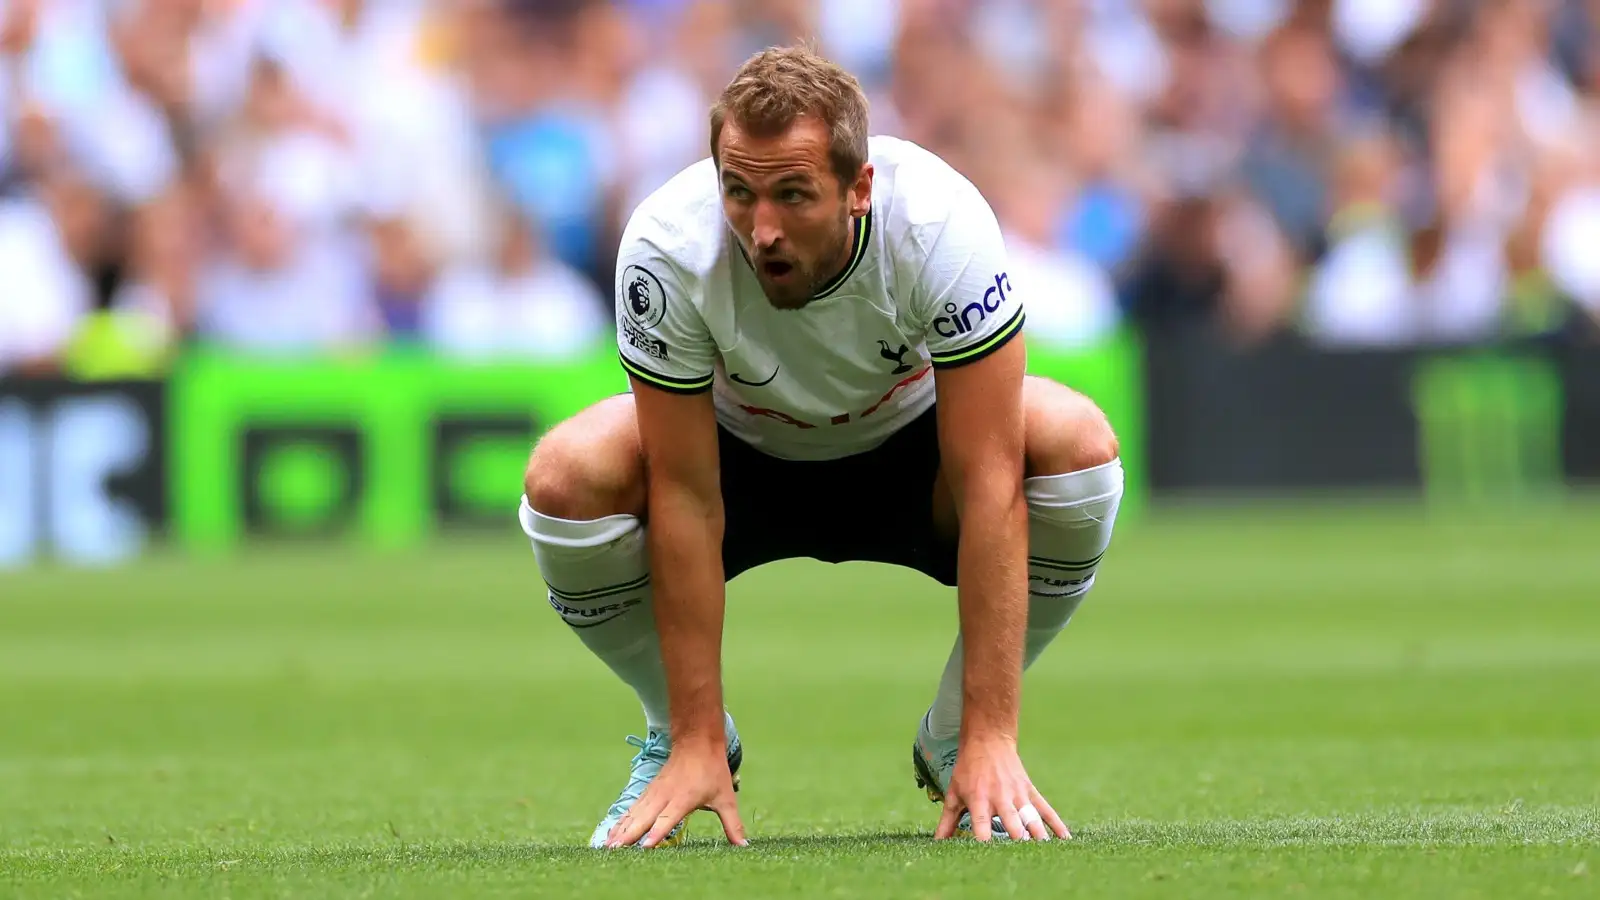 Tottenham striker Harry Kane squats during a match against Fulham